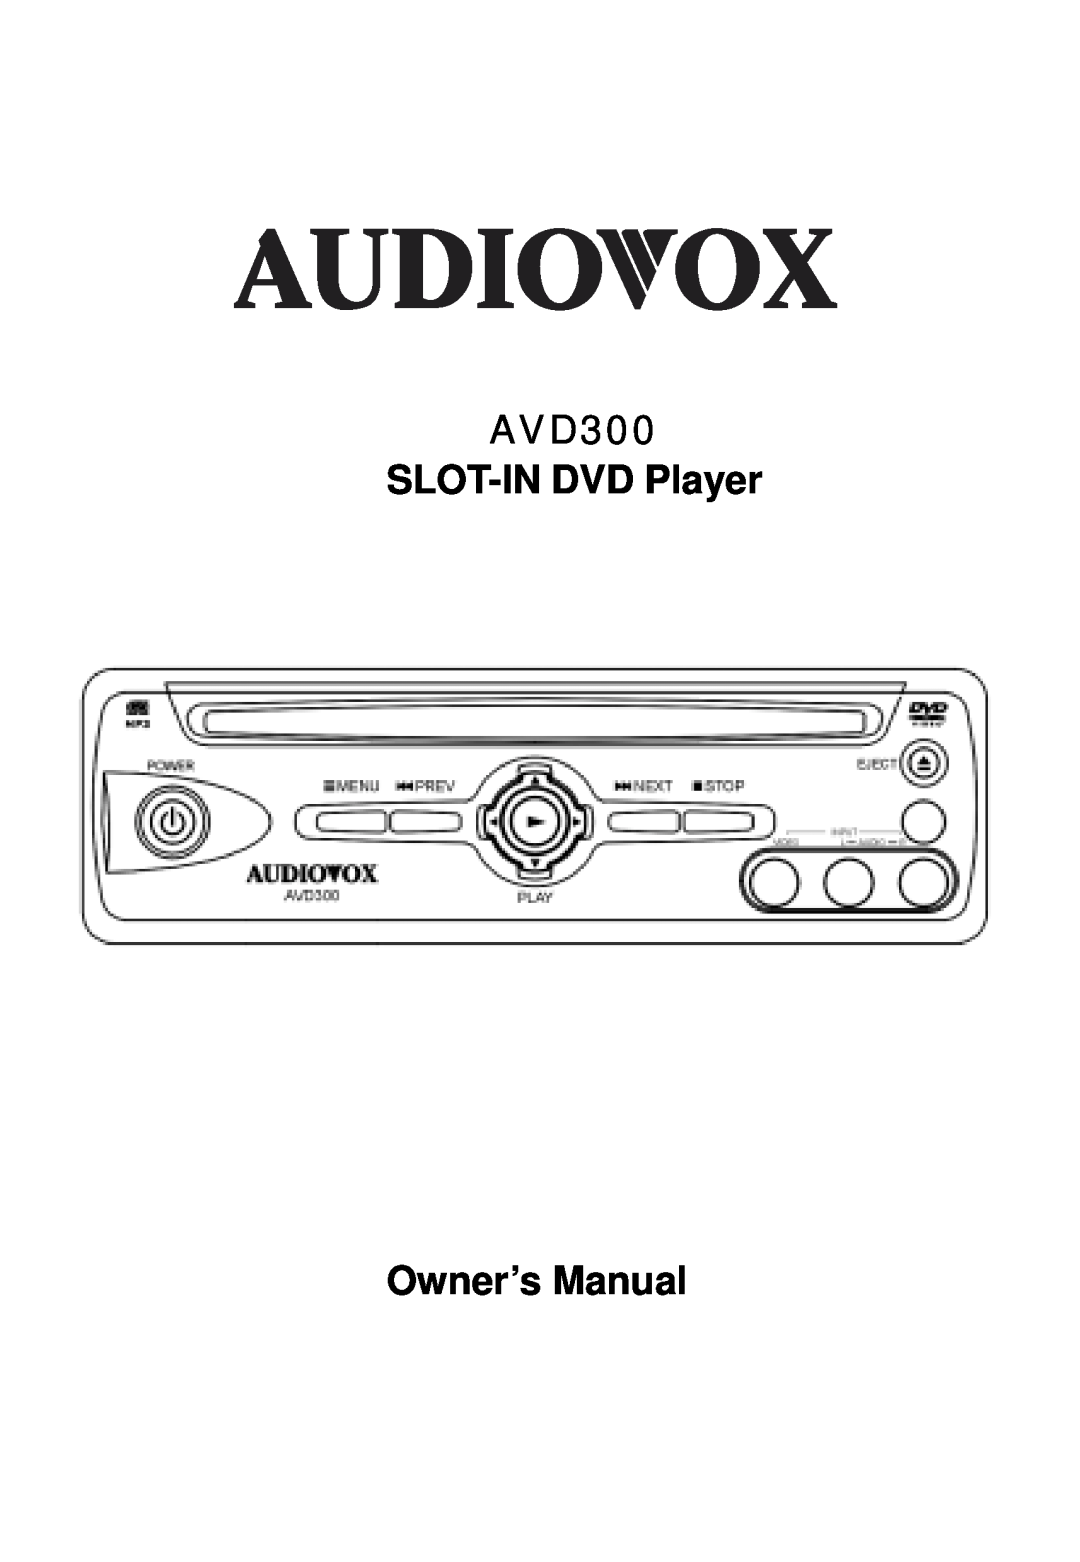 Audiovox owner manual AVD300 SLOT-IN DVD Player, Owner’s Manual 